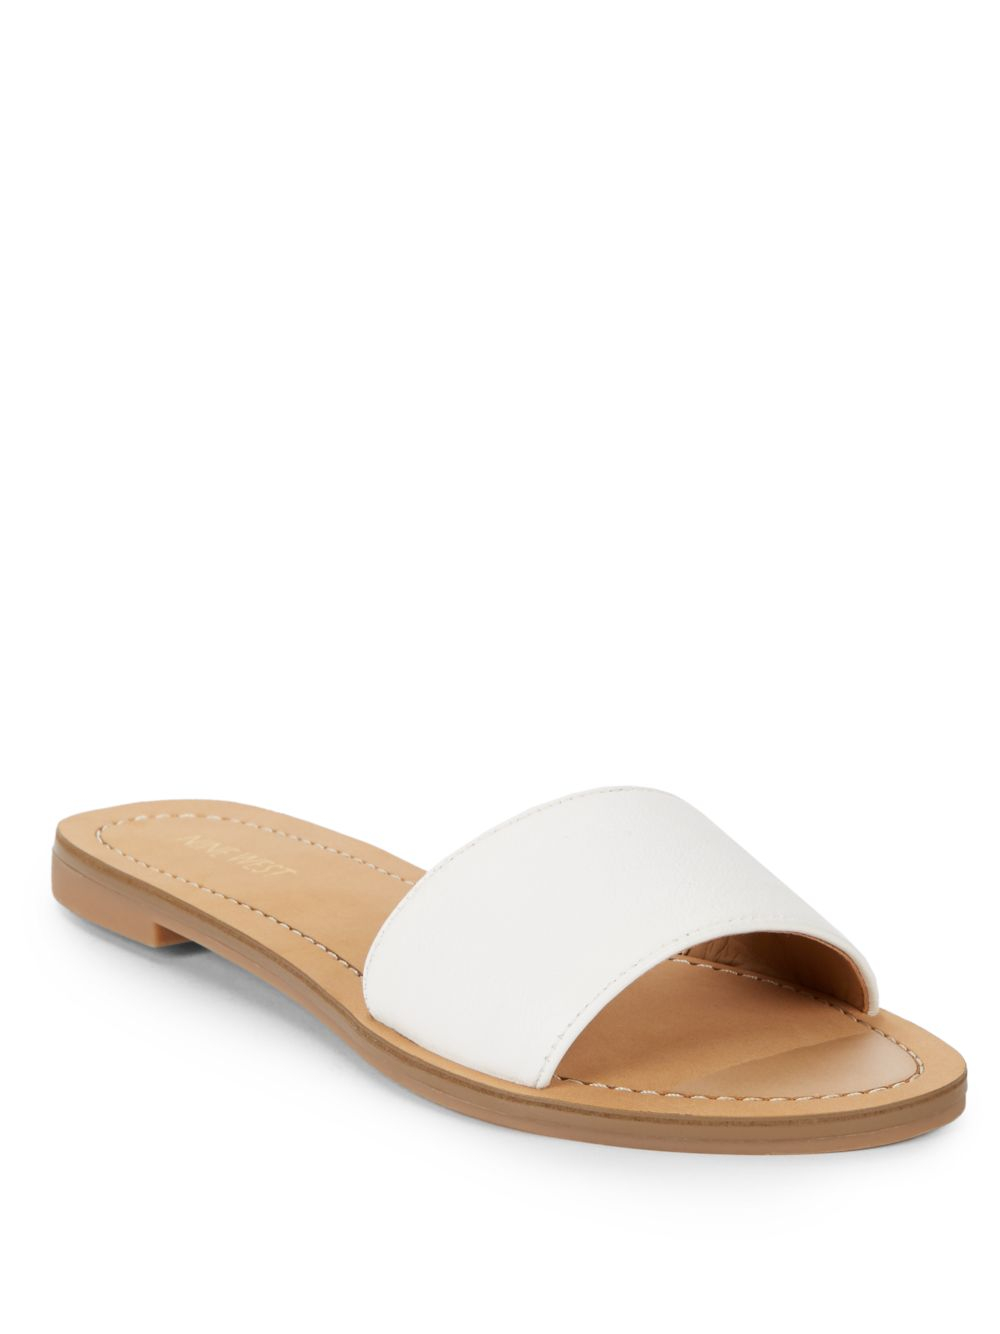 white leather slide sandals